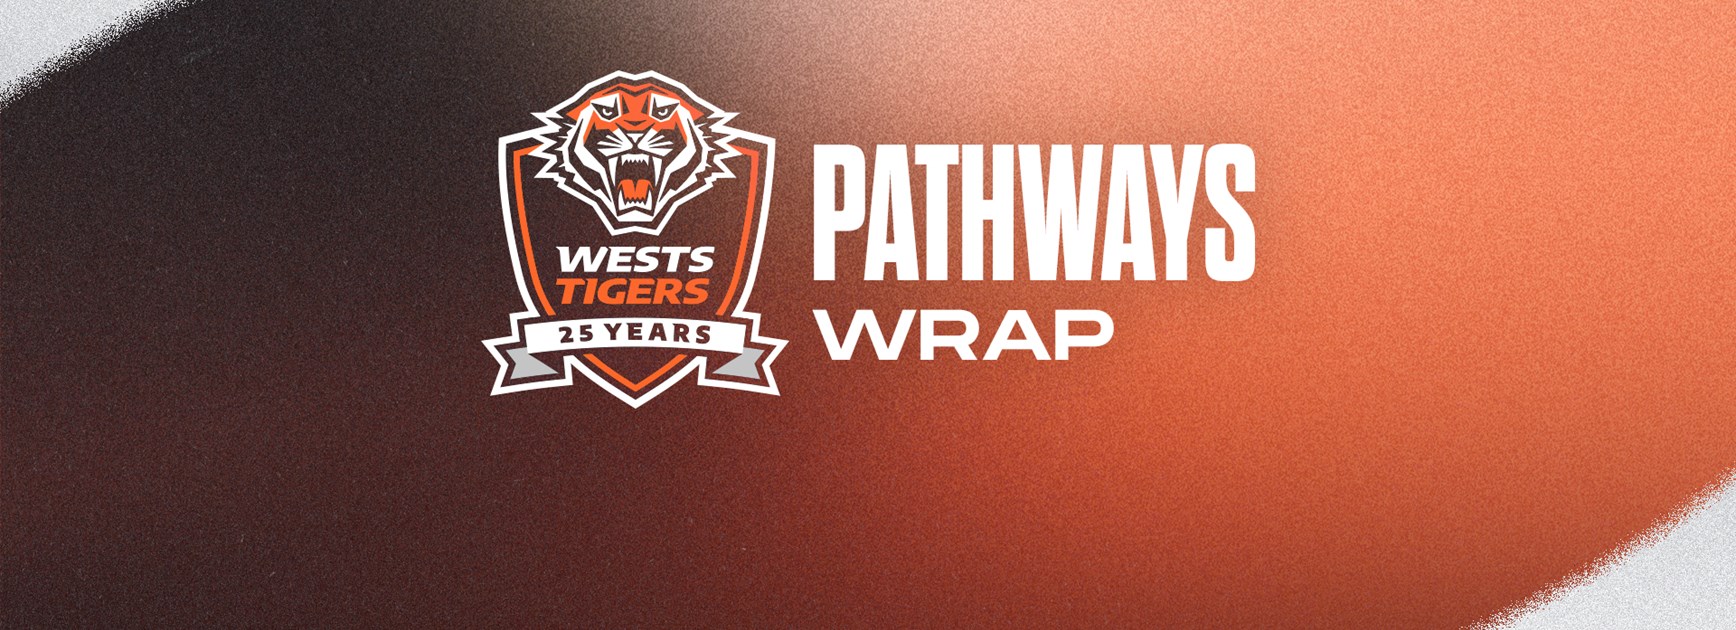 Pathways Wrap: Round 8